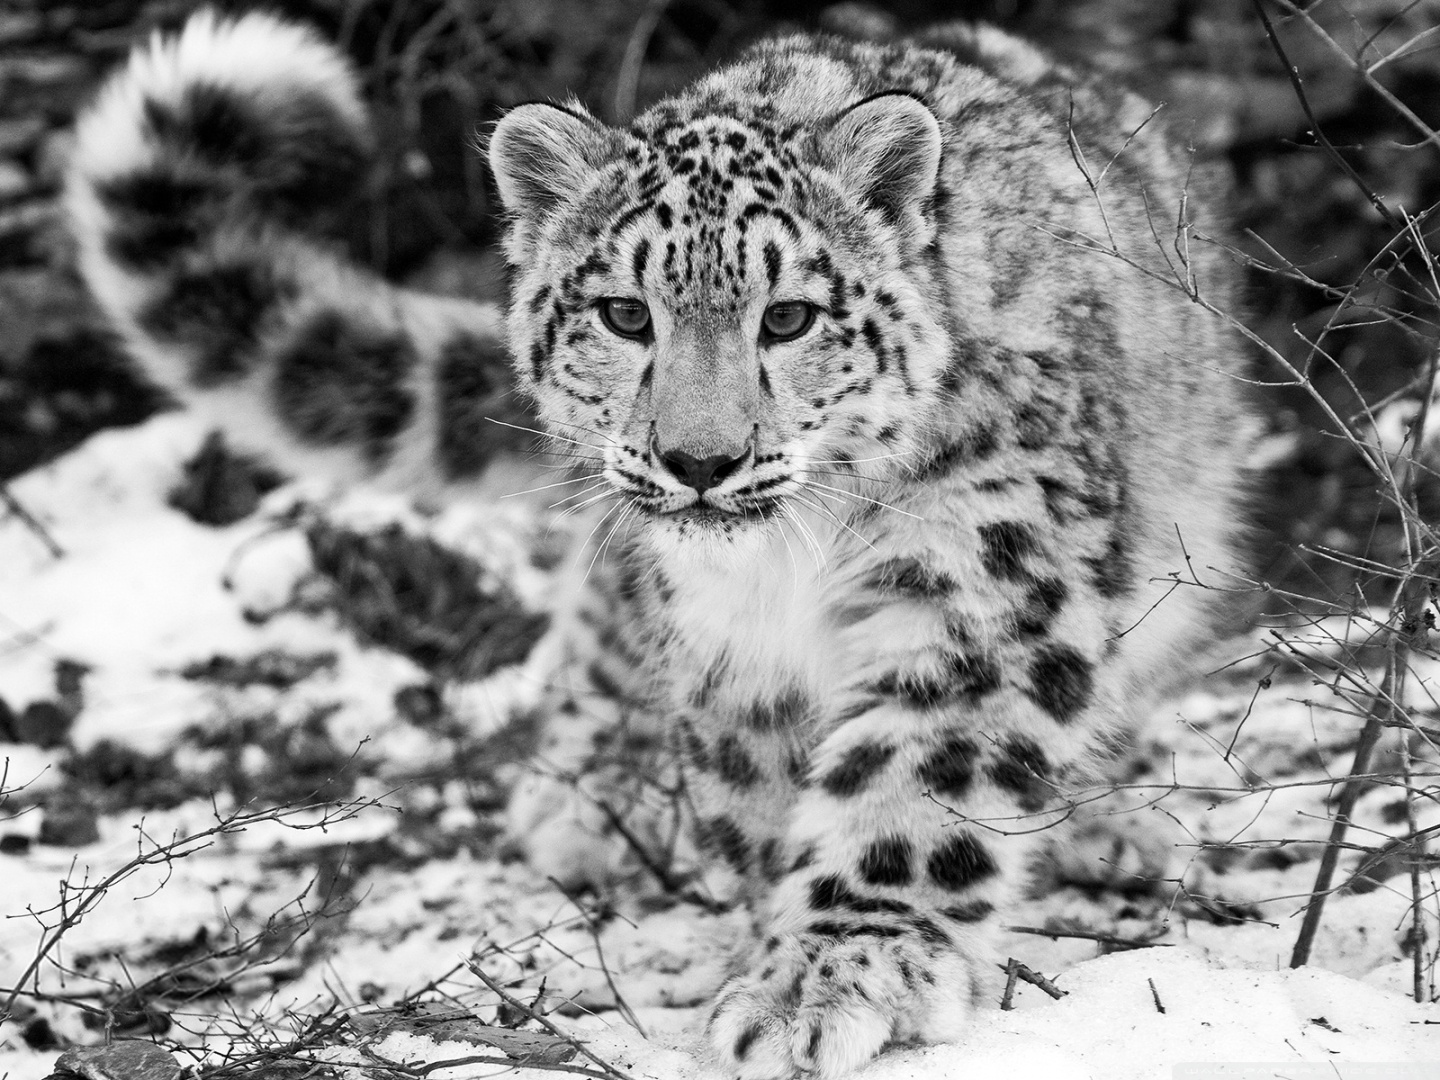 Snowshoes for Snow Leopards